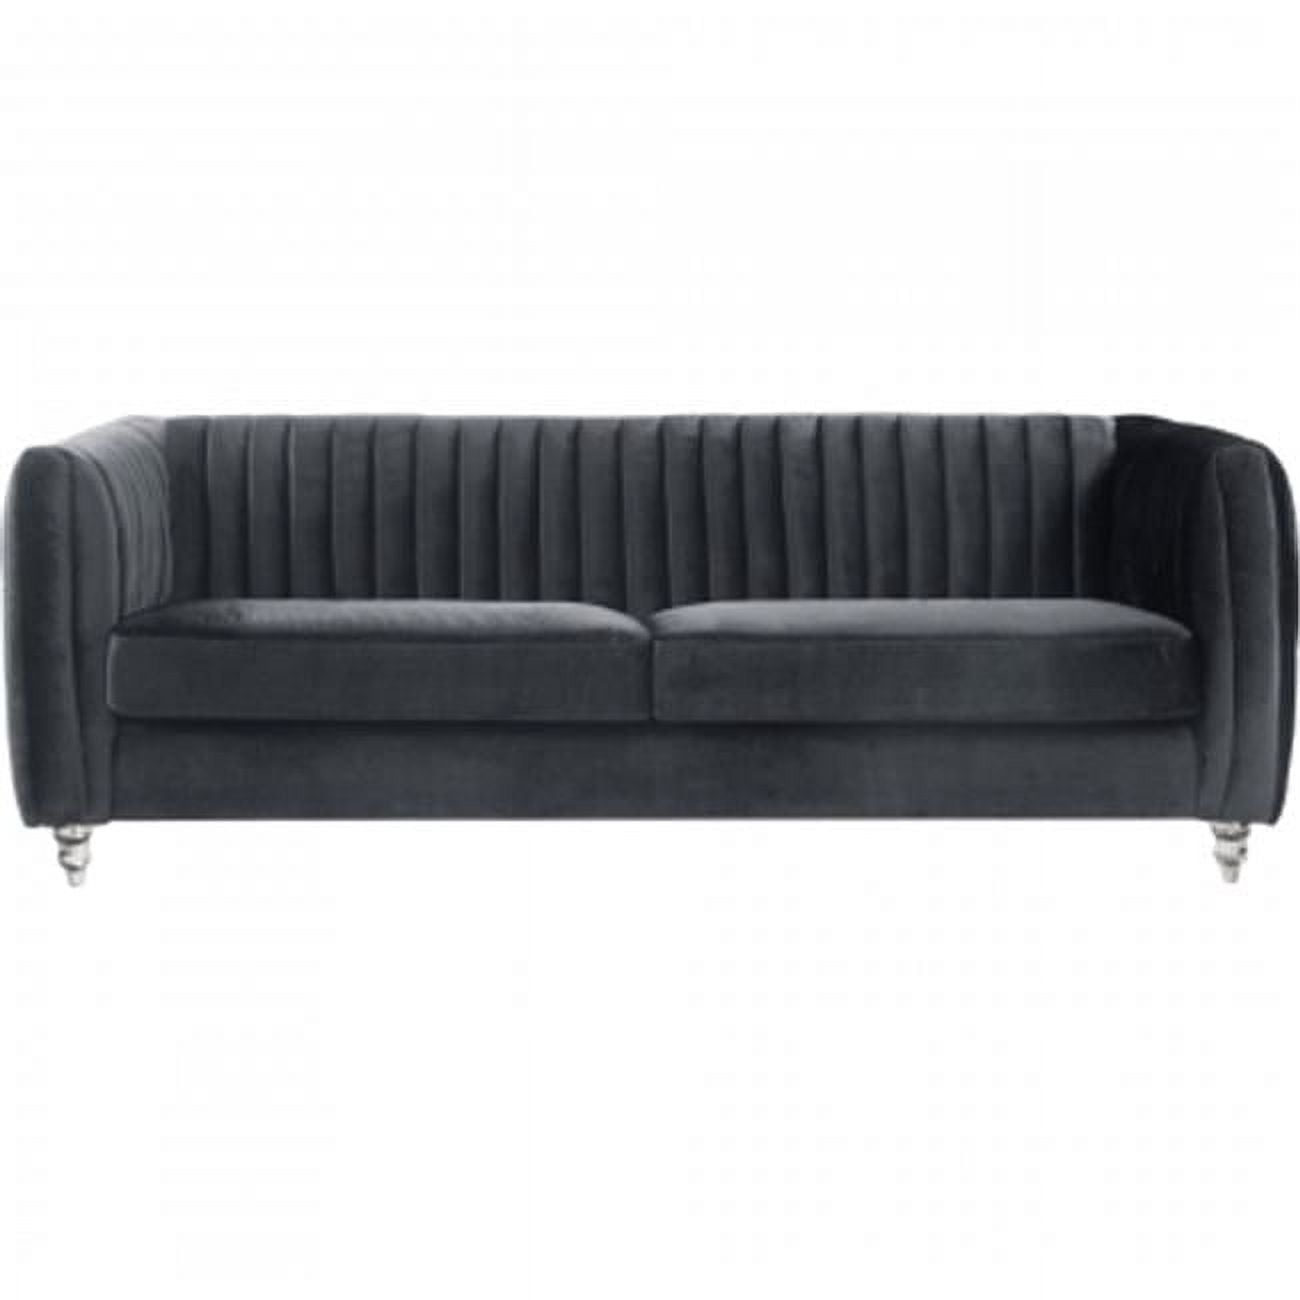 Fsa2666 Chic Home Priscilla Elegant Velvet Modern Contemporary Plush Cushion Seat Round Acrylic Feet Sofa - Grey